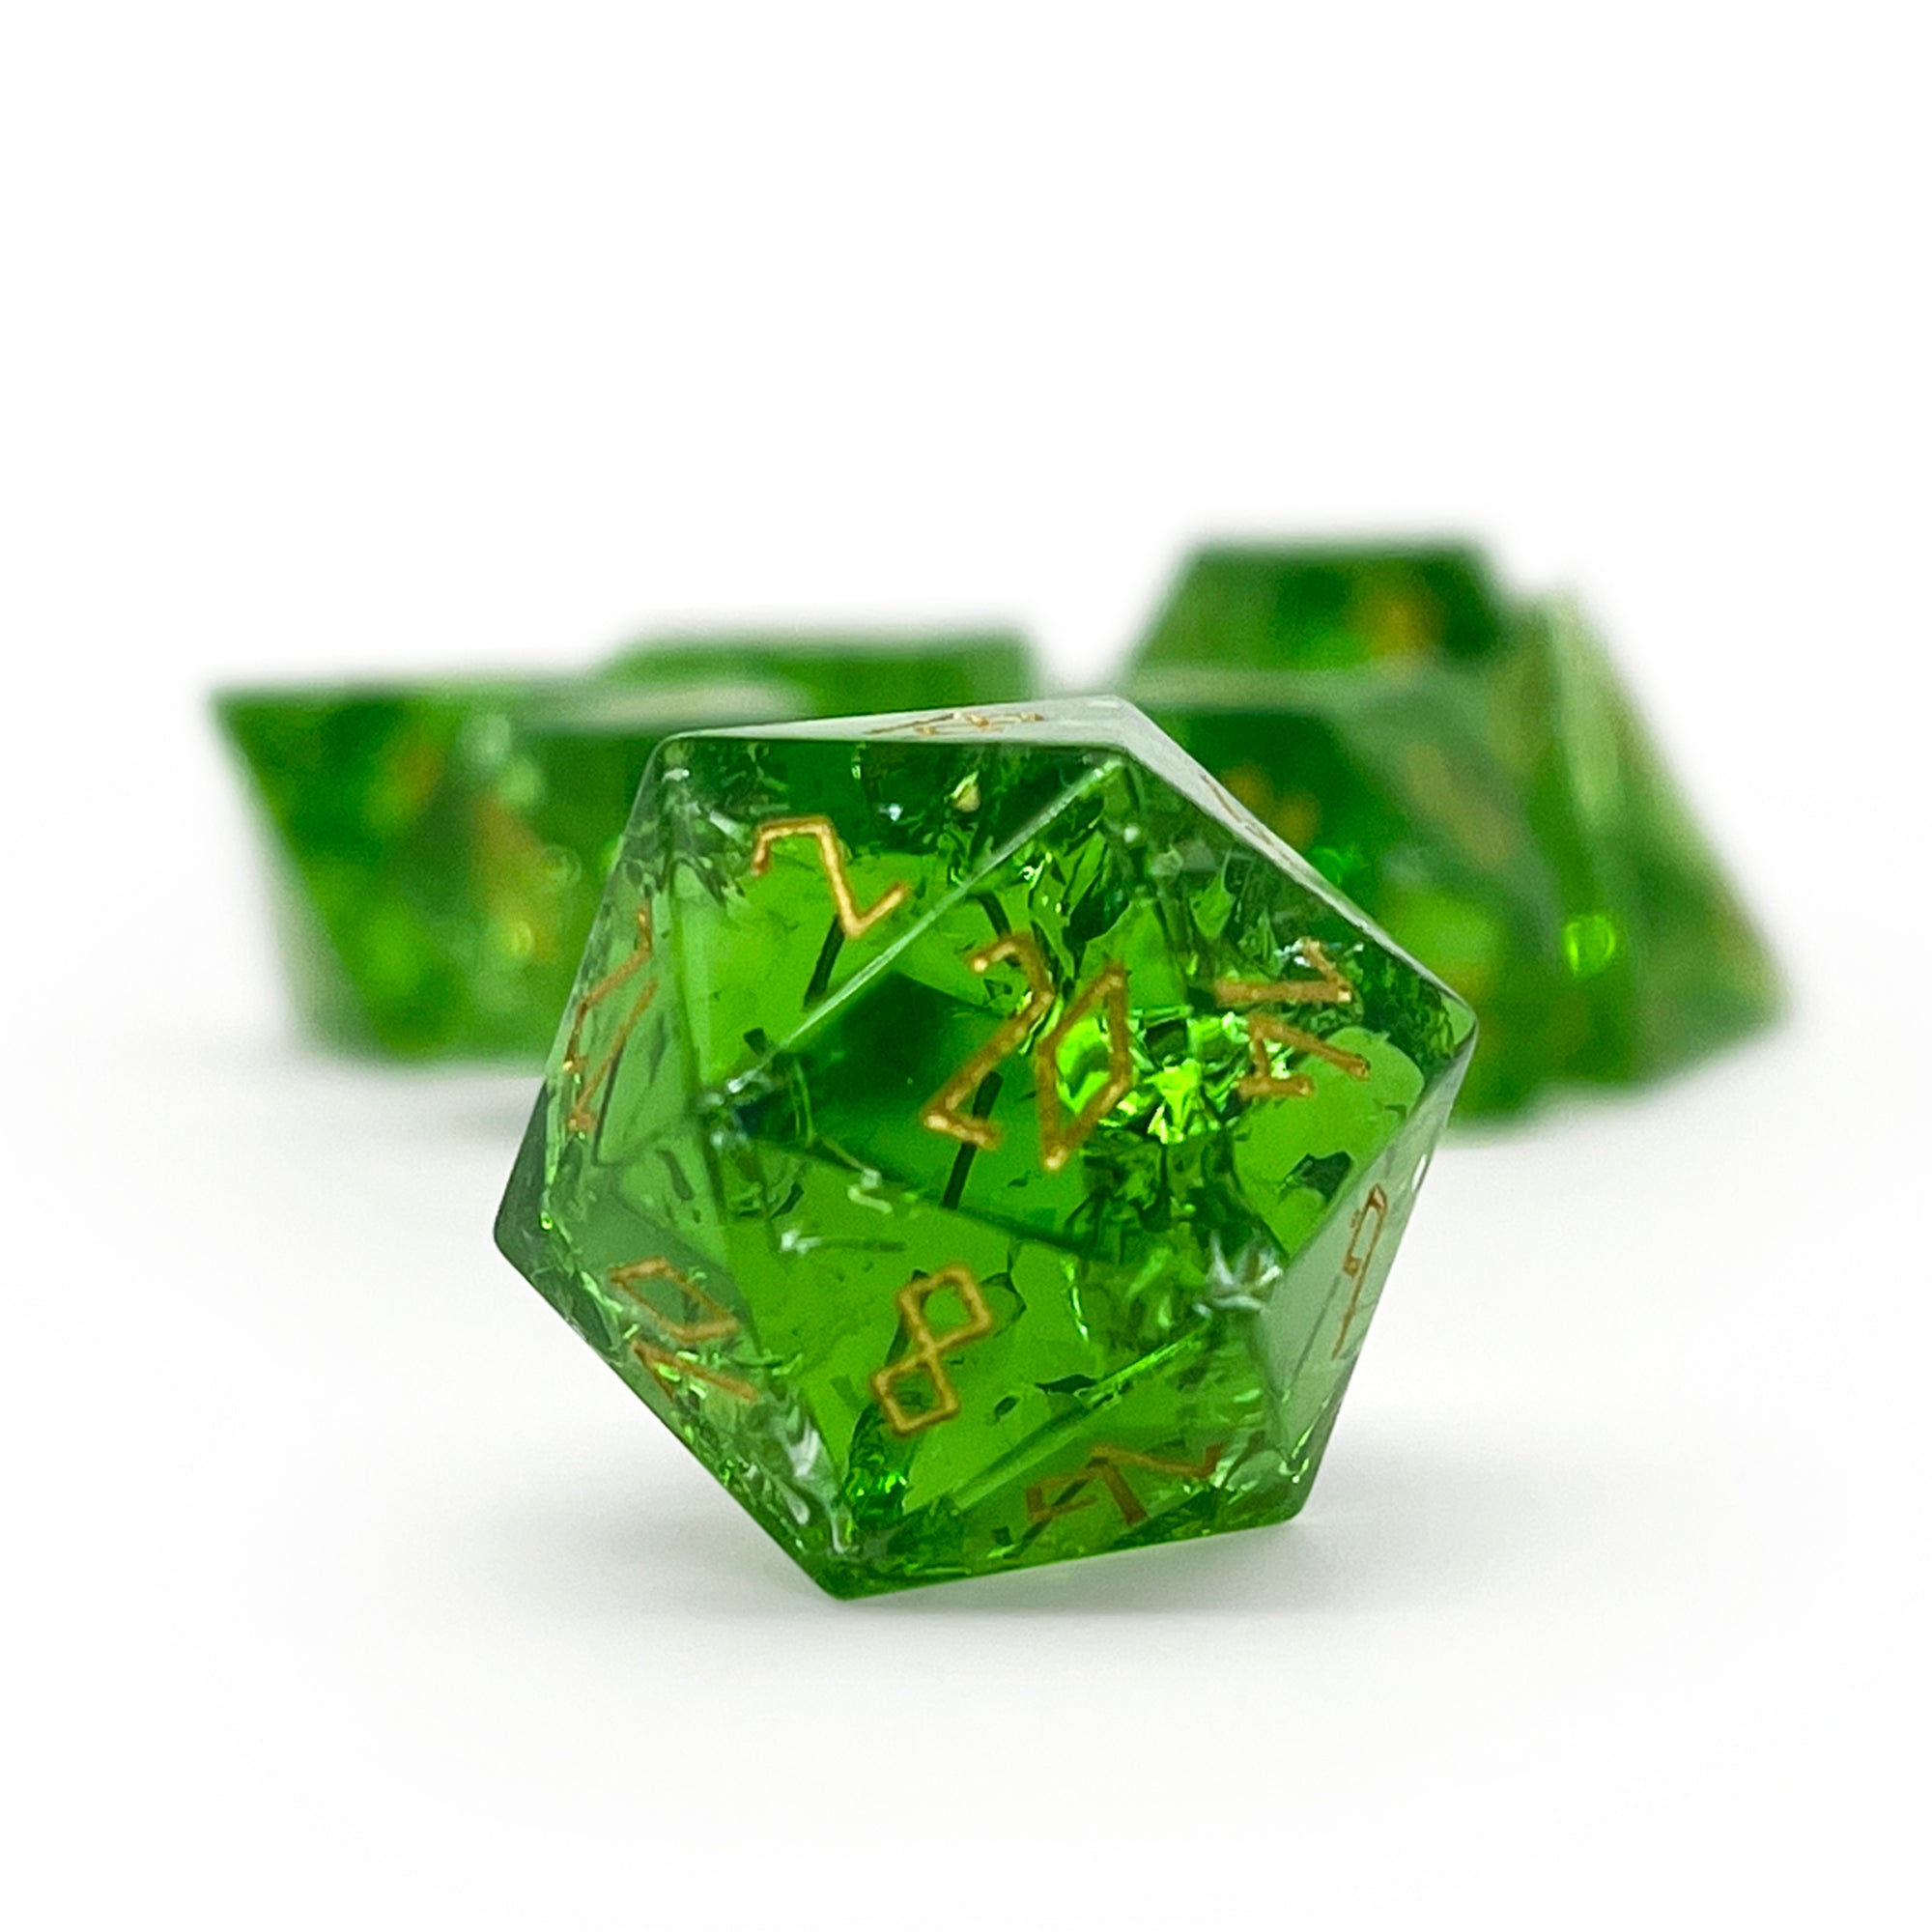 Shattered Zircon Emerald - Gold Font 7 Piece RPG Set Zircon Glass Dice